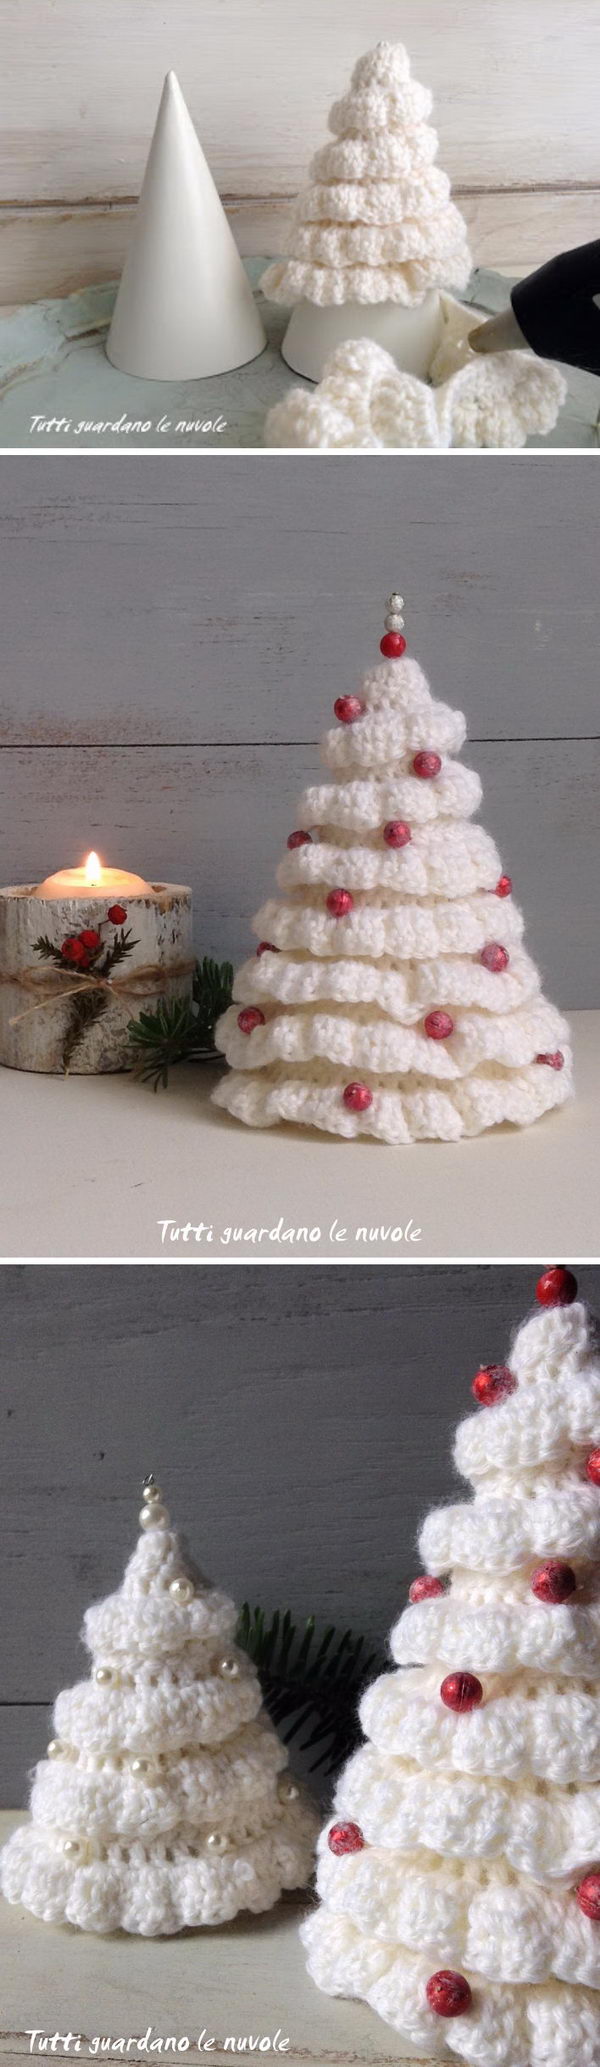 Crochet Christmas trees. 